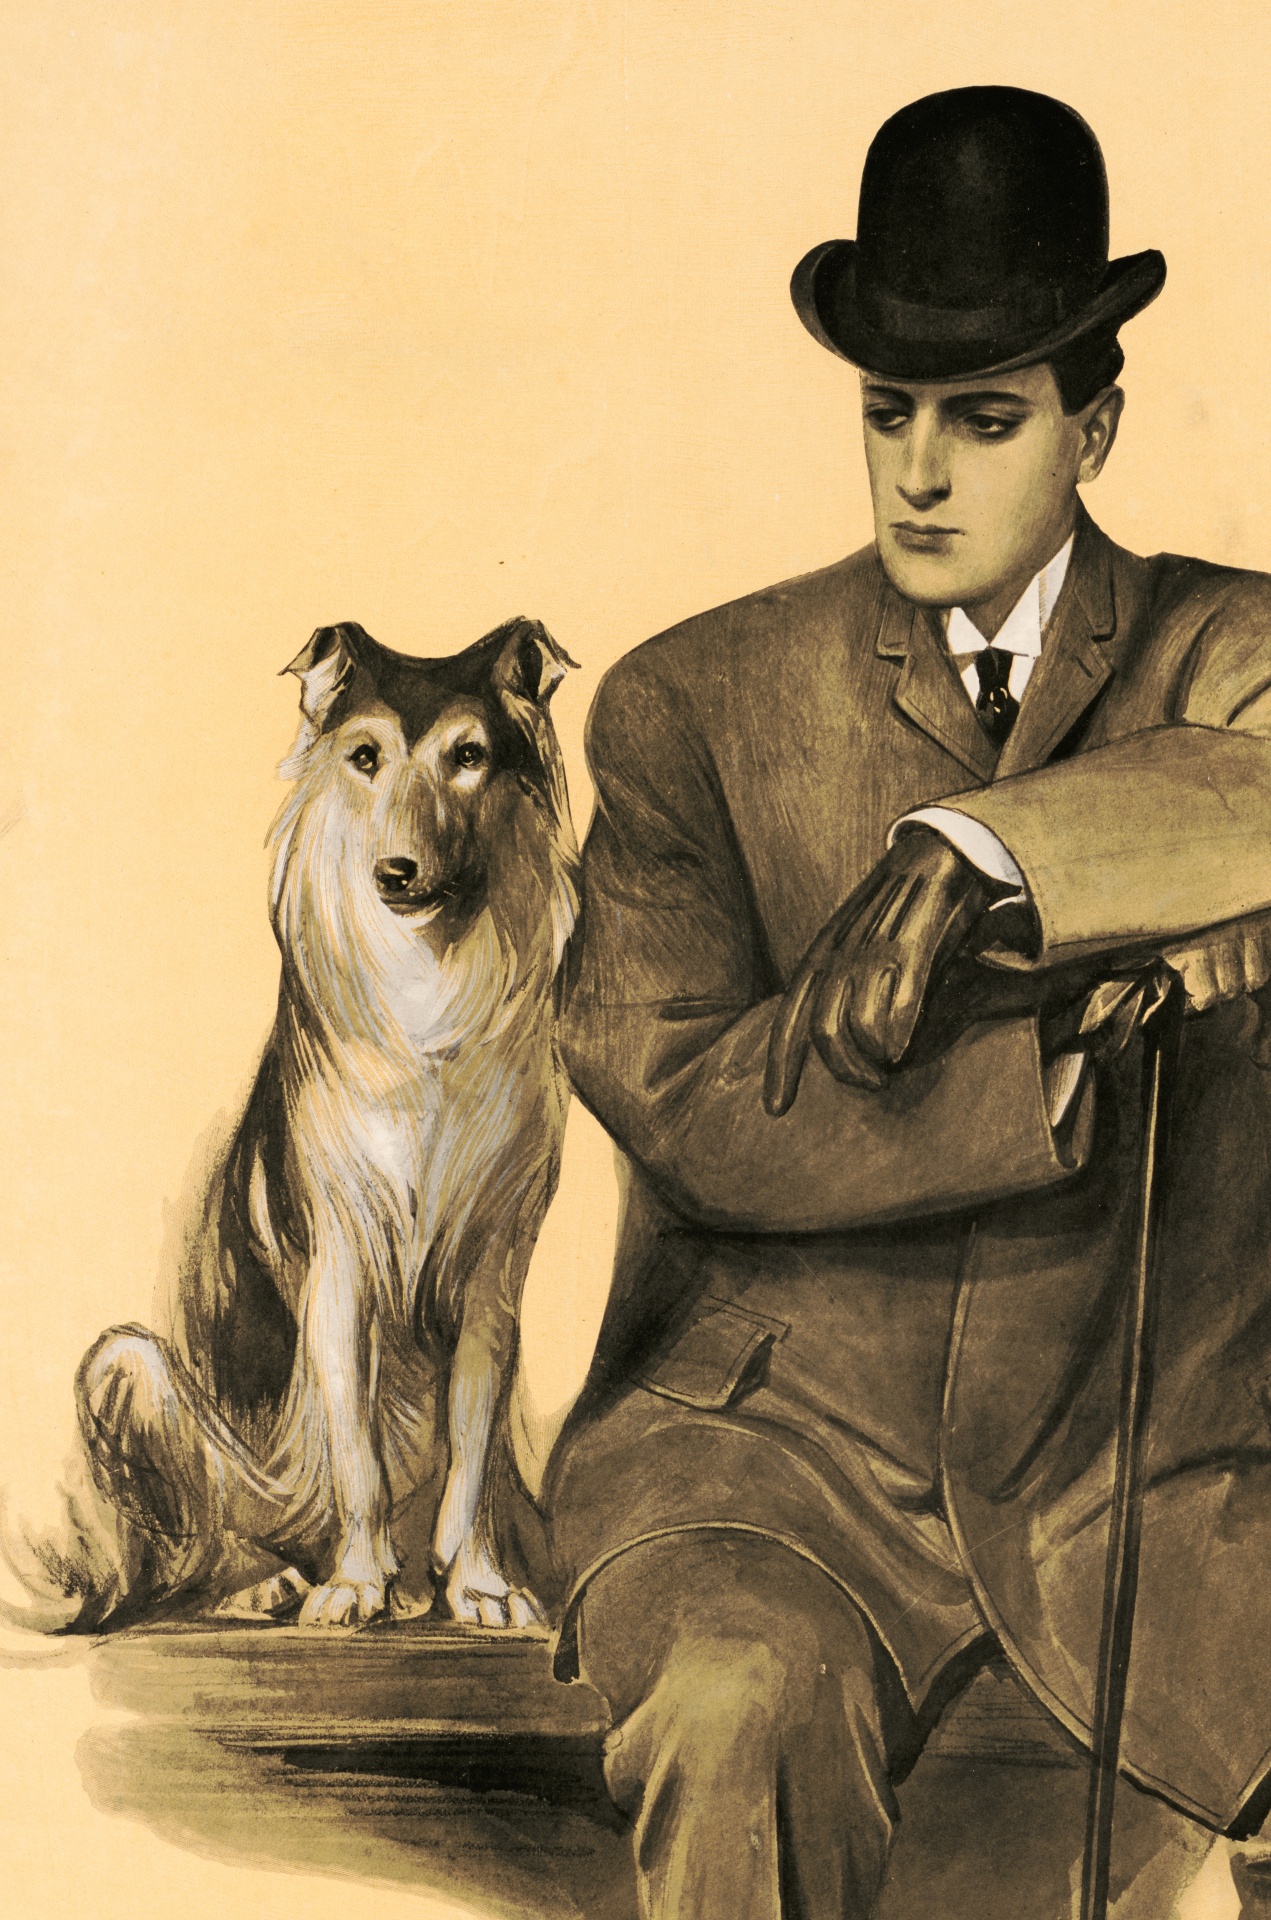 Poster vintage di cane uomo